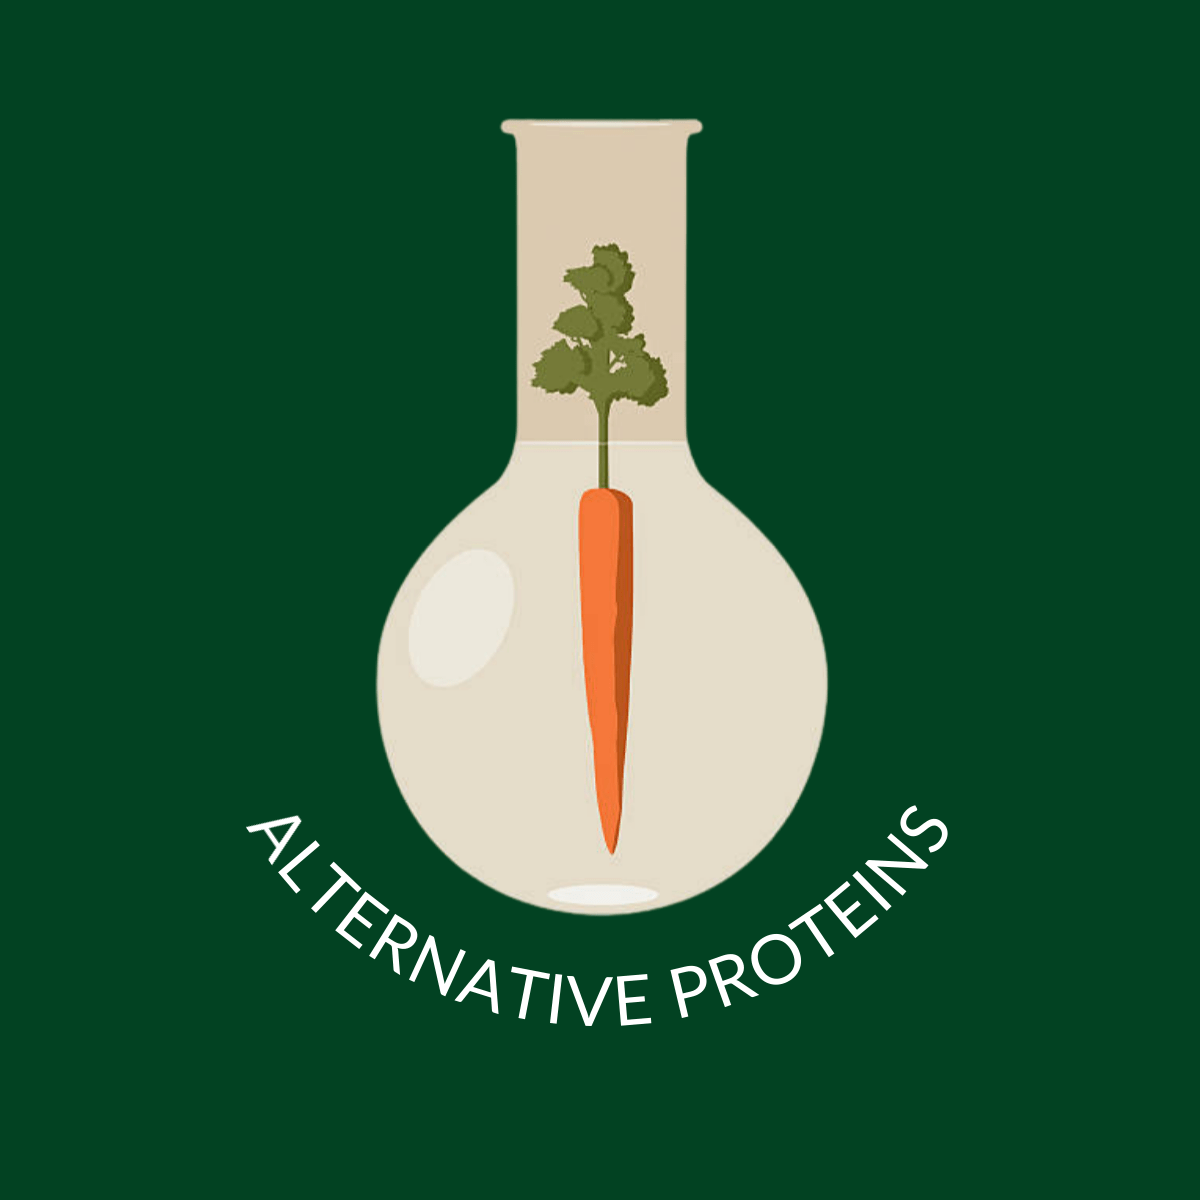 Alternative Protein Innovation